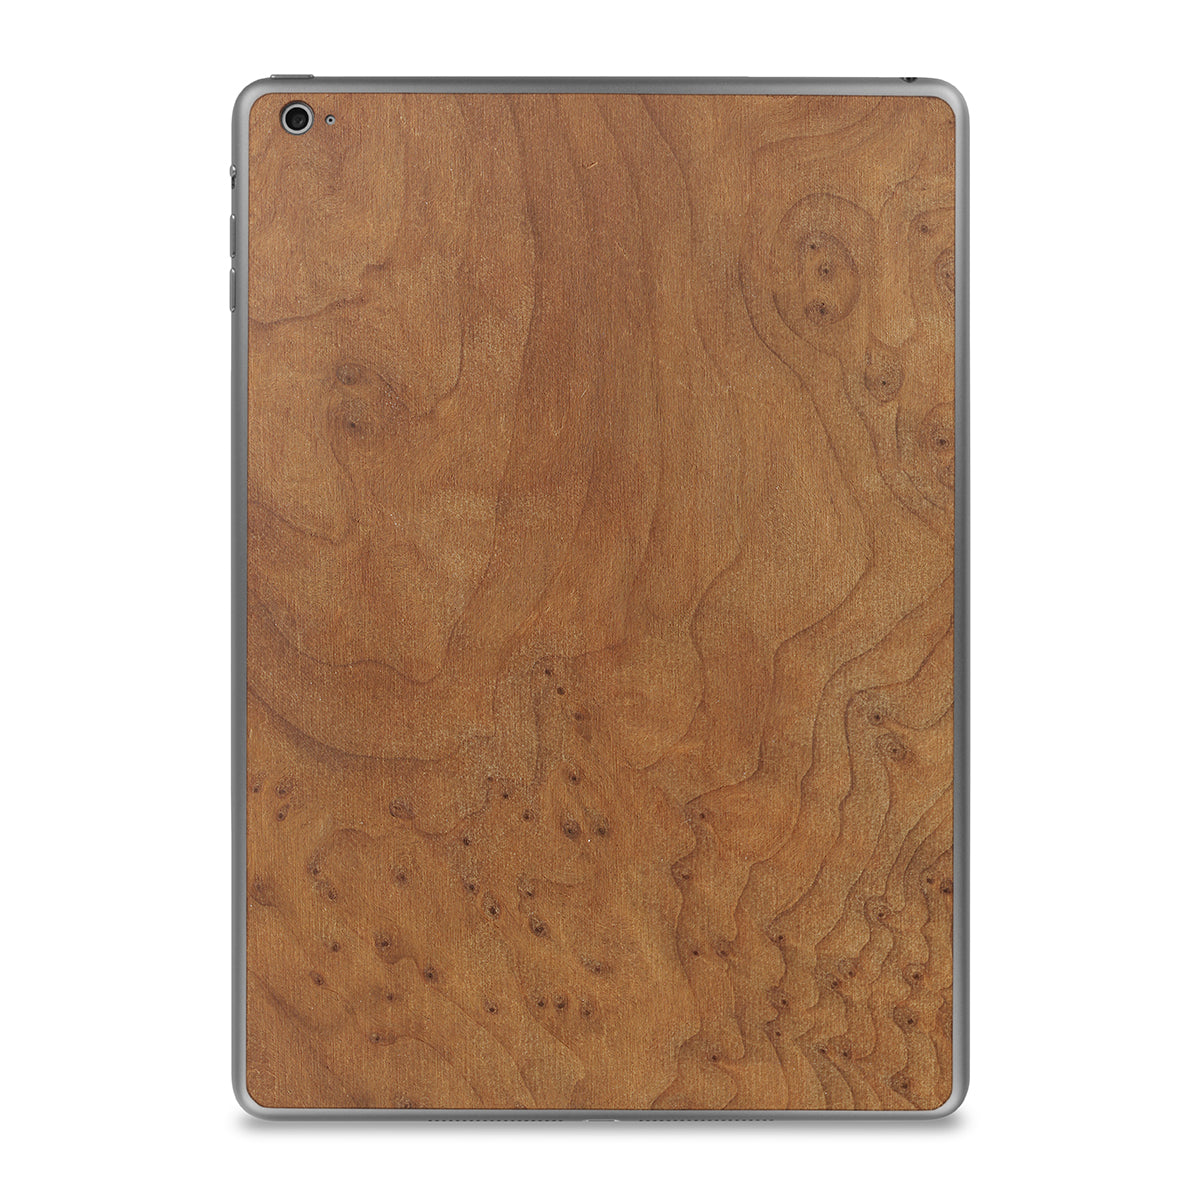 iPad Air 2 — #WoodBack Skin